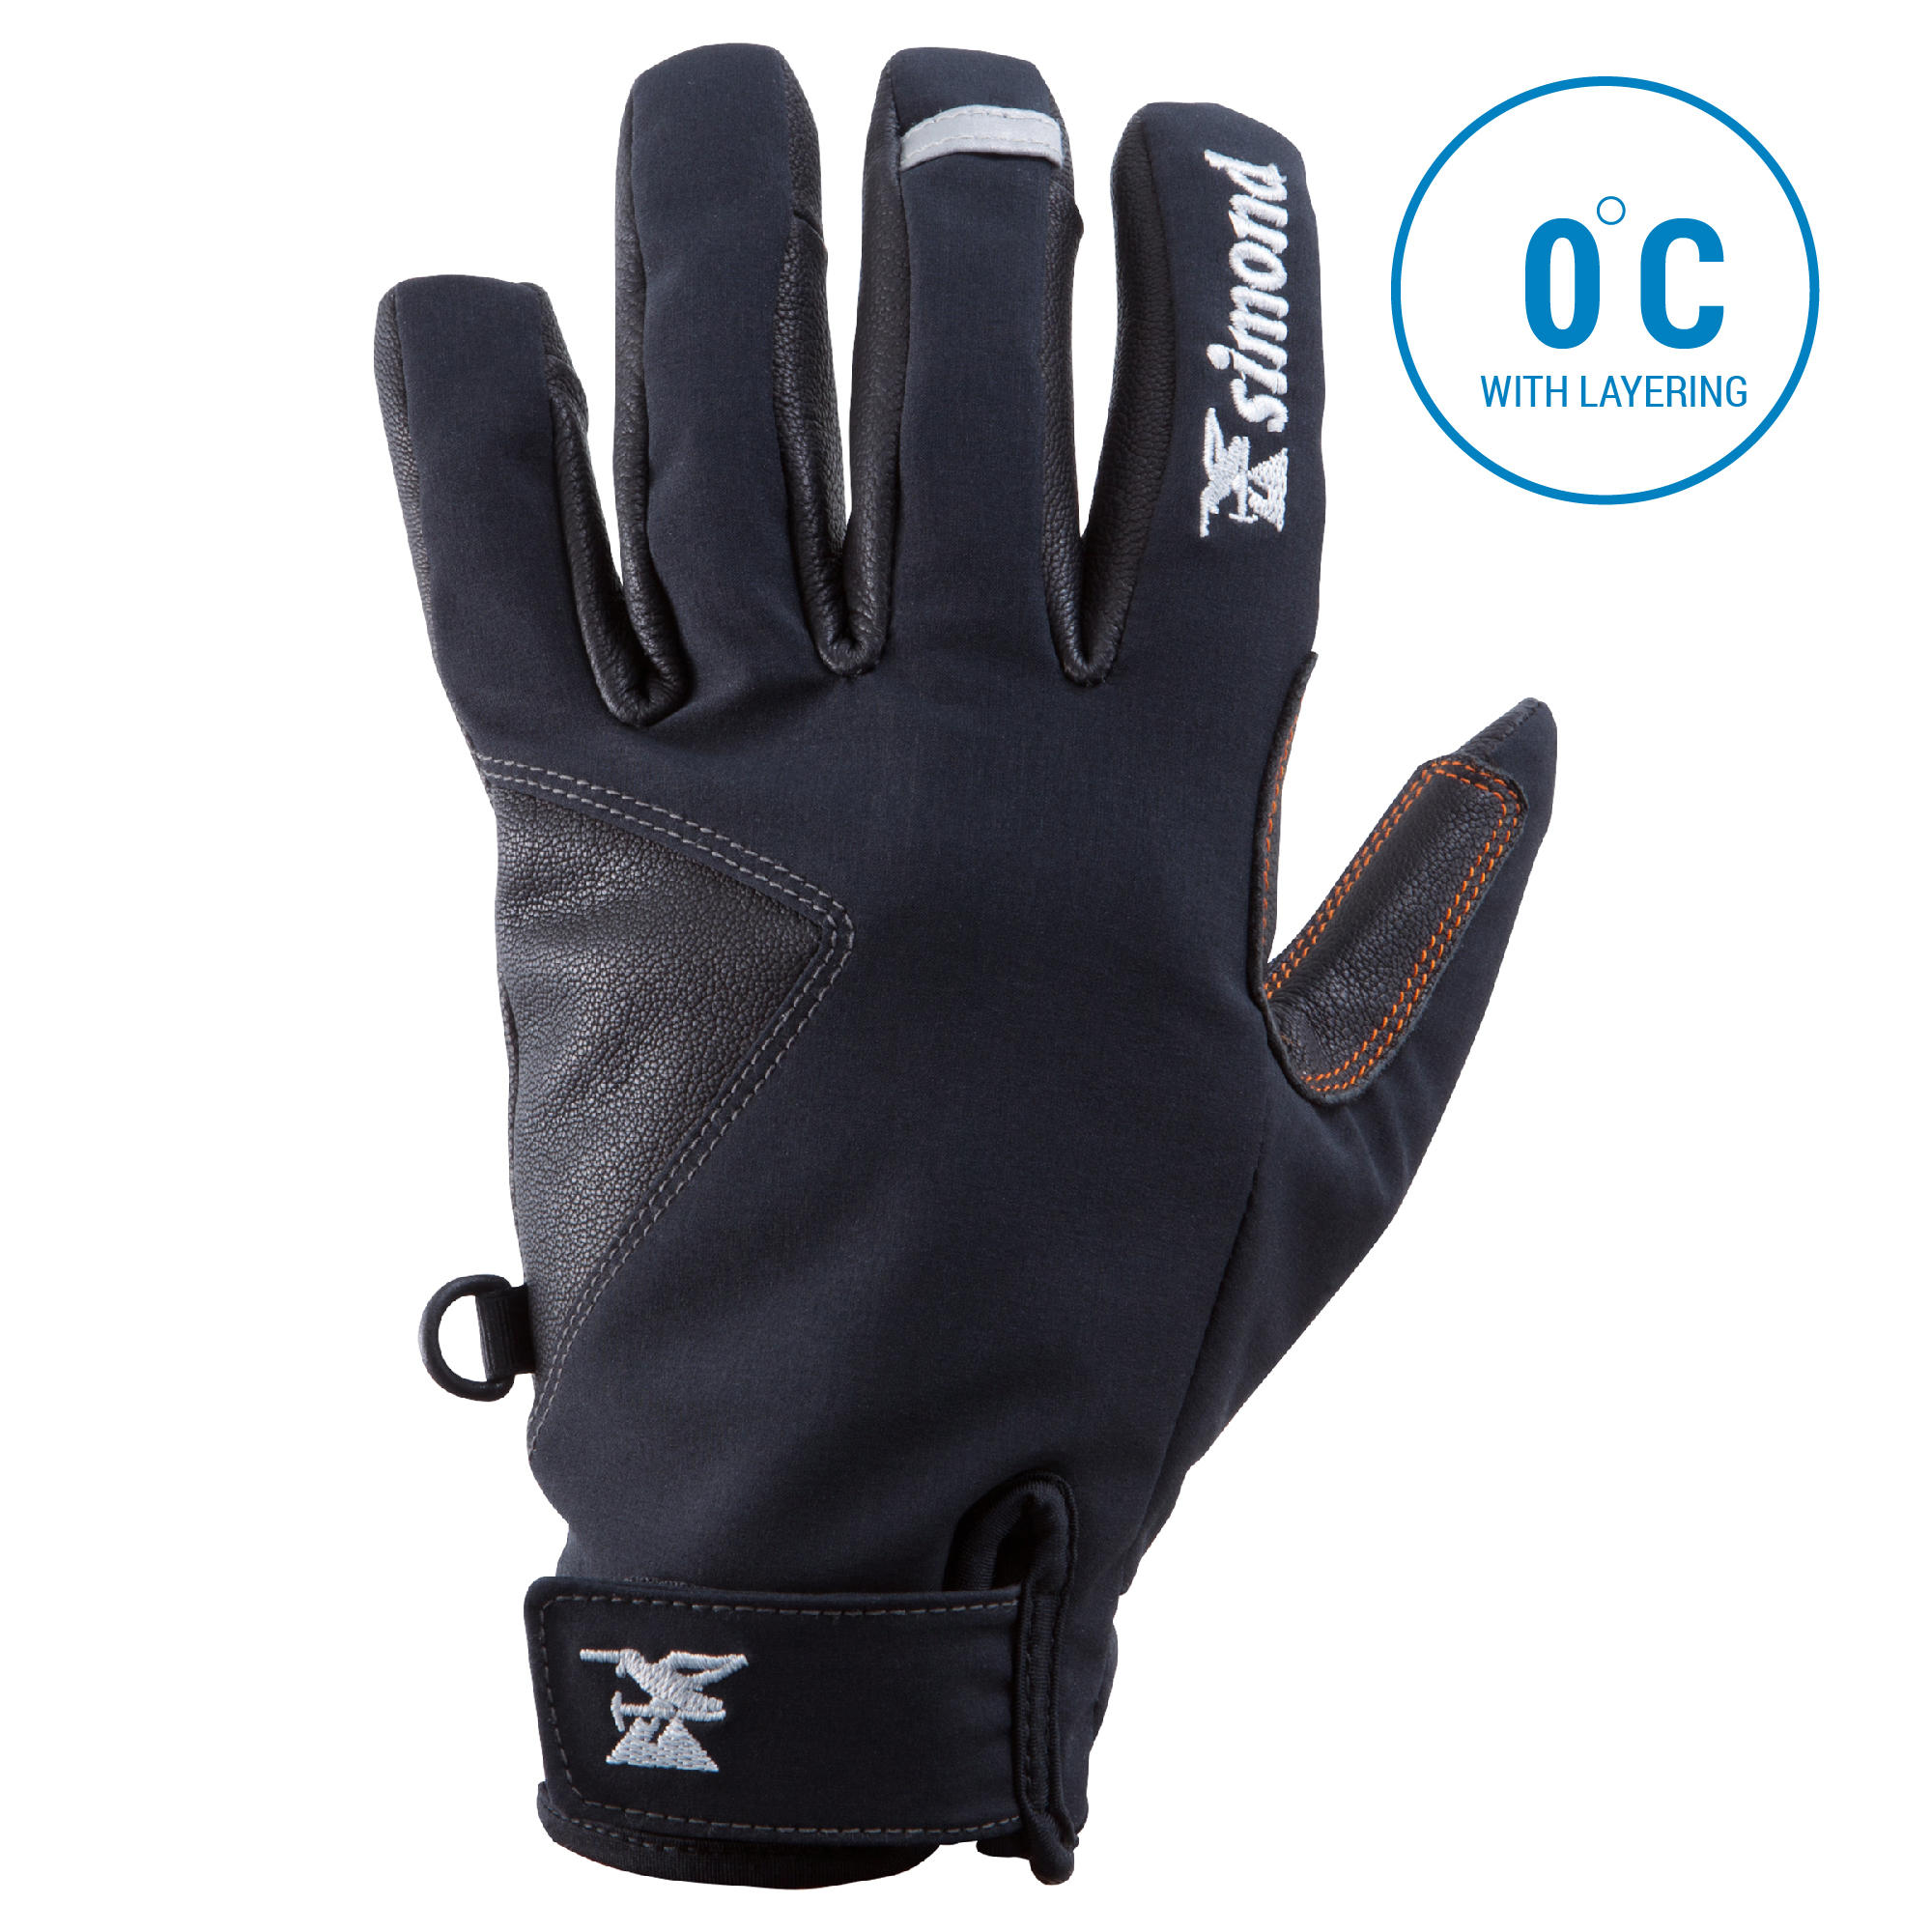 waterproof hand gloves for bike